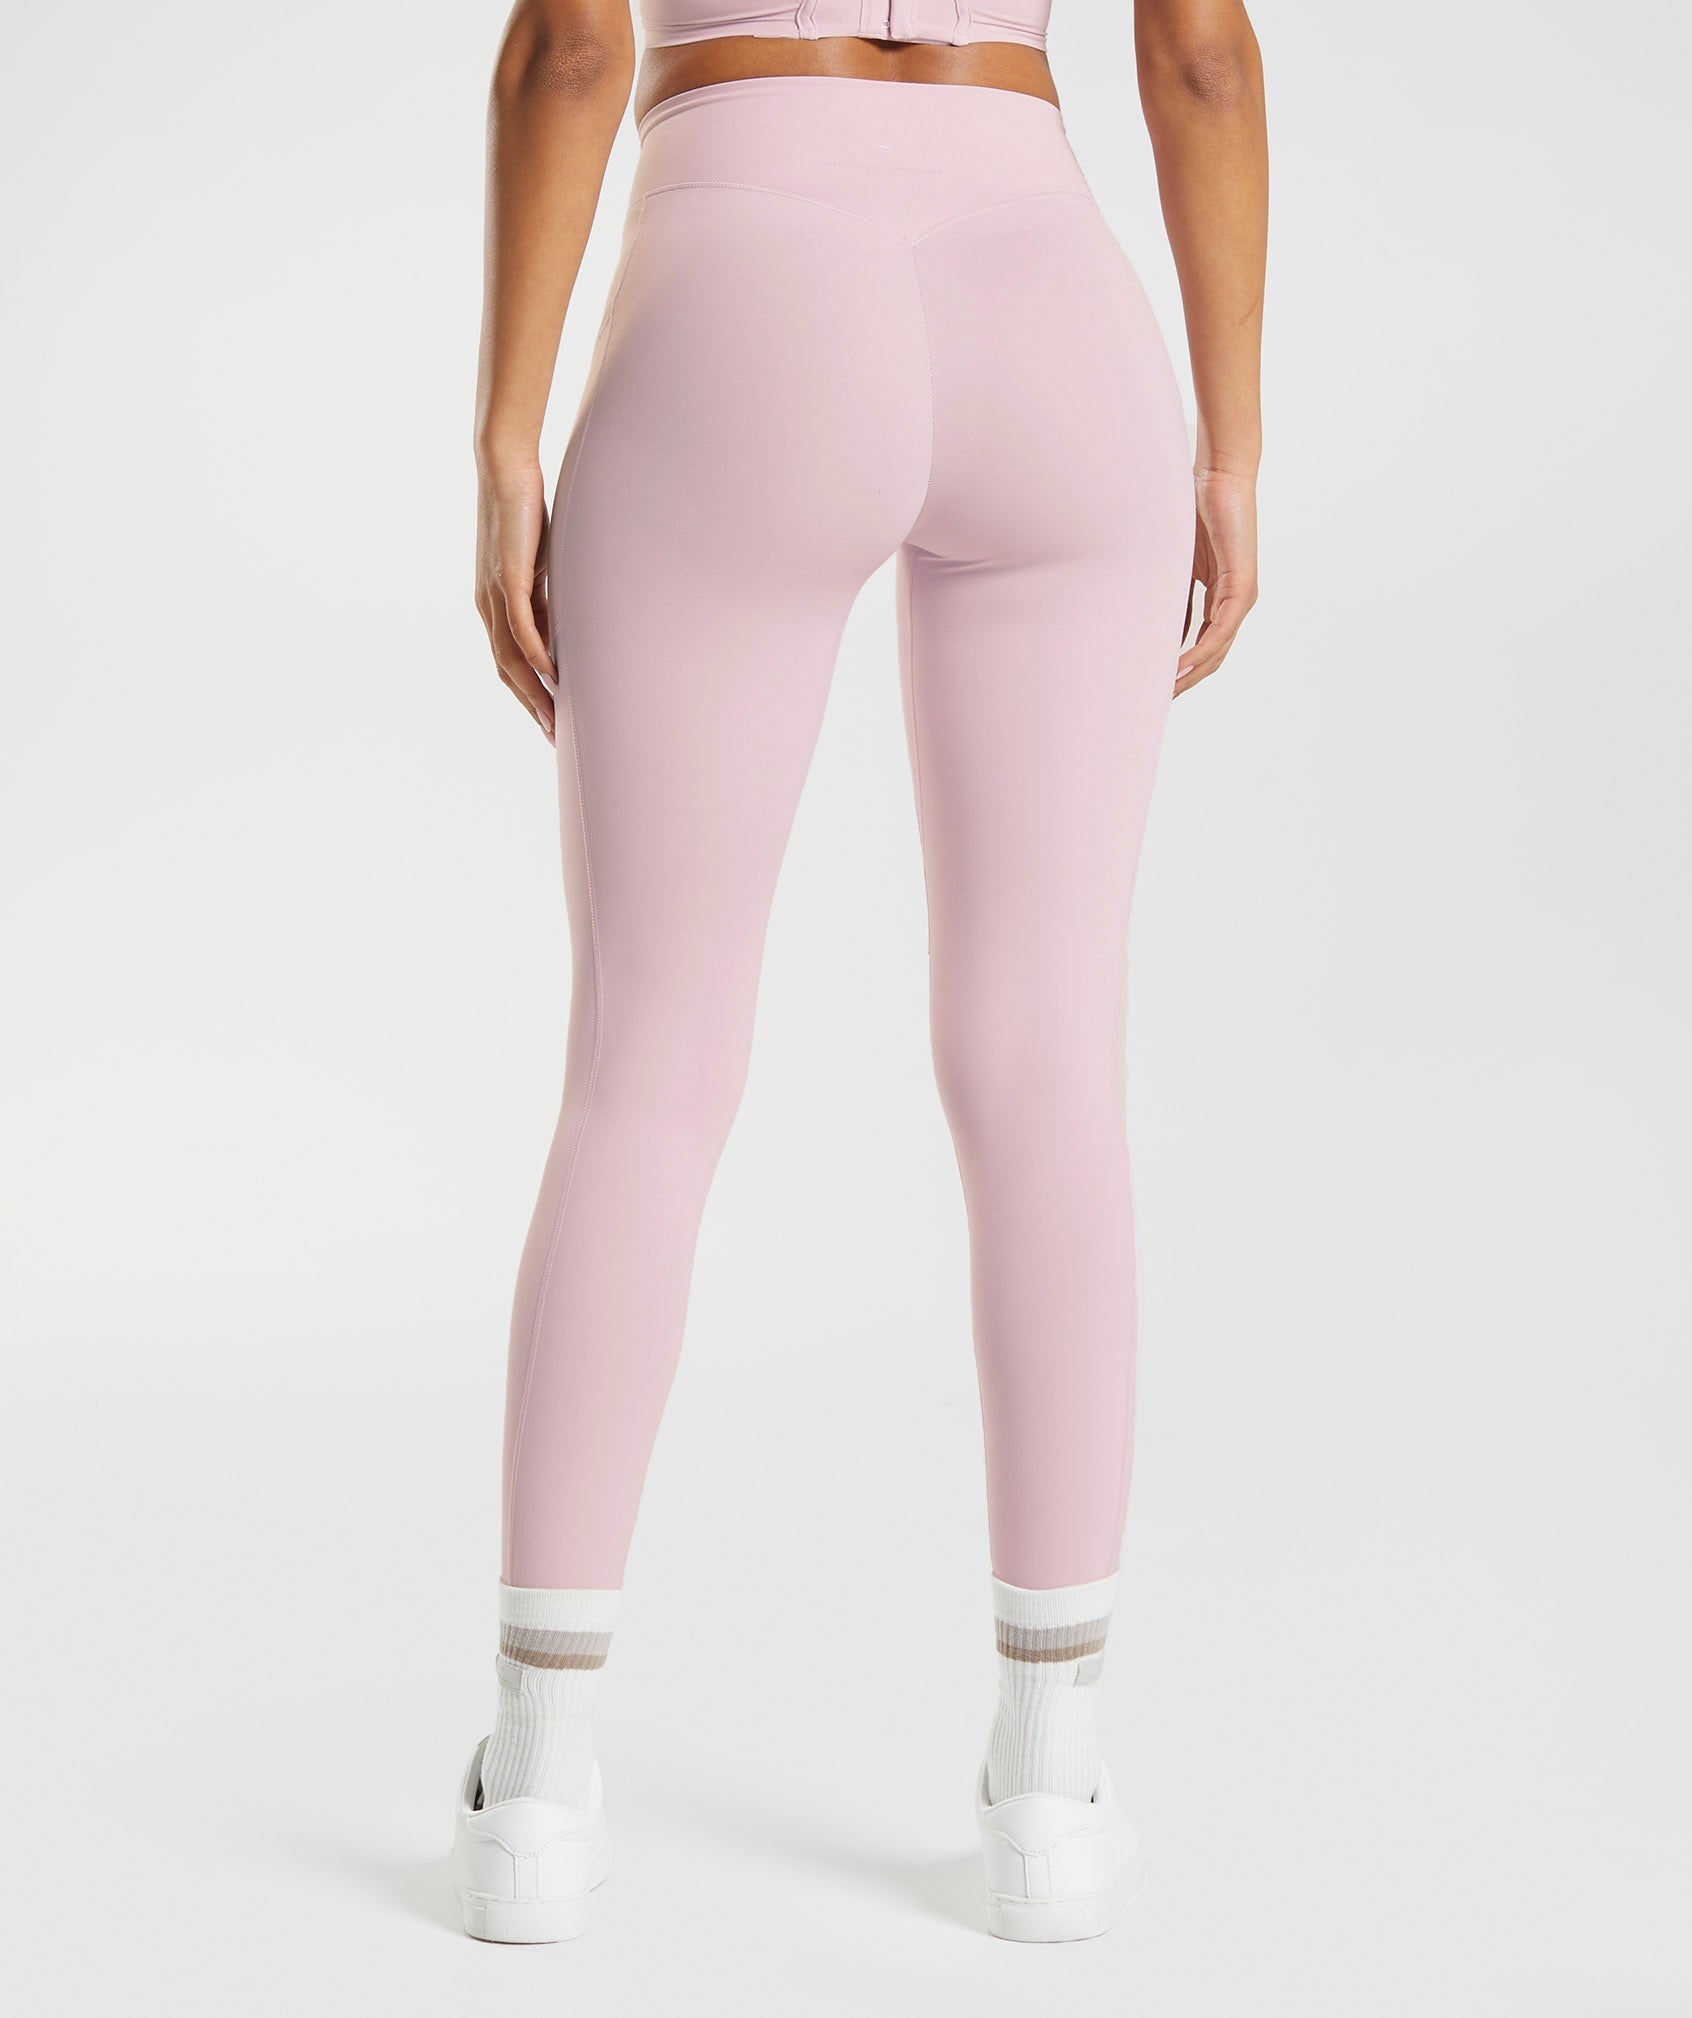 Buy Gymshark women plain pull on underwear light pink Online